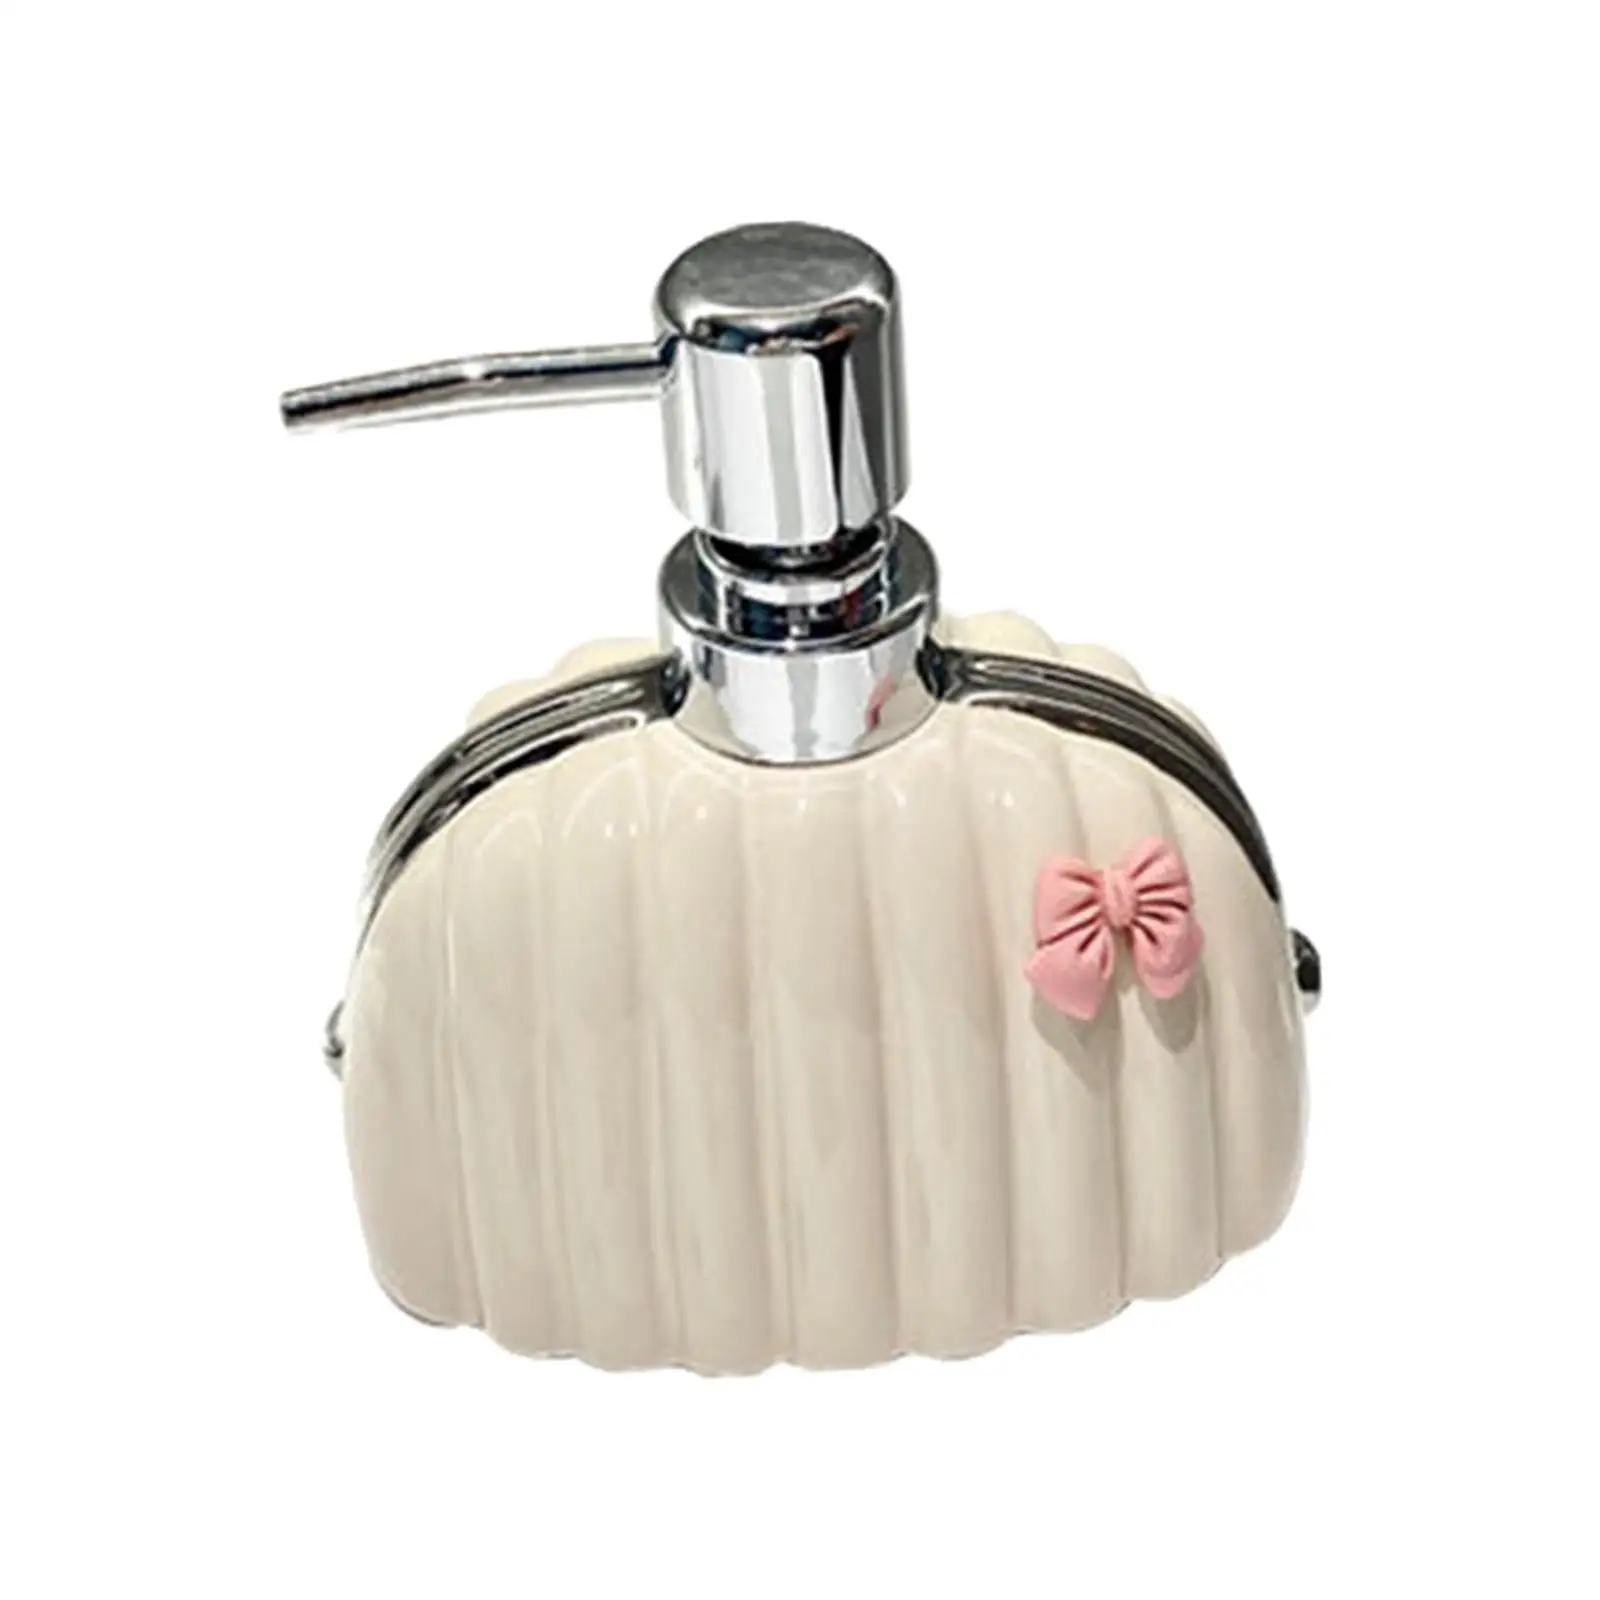 Lotion Pump Dispenser Cute Empty Liquid Dispenser Bow Tie White Hand Soap Dispenser for Hotel Bathroom Bedroom Kitchen Laundry